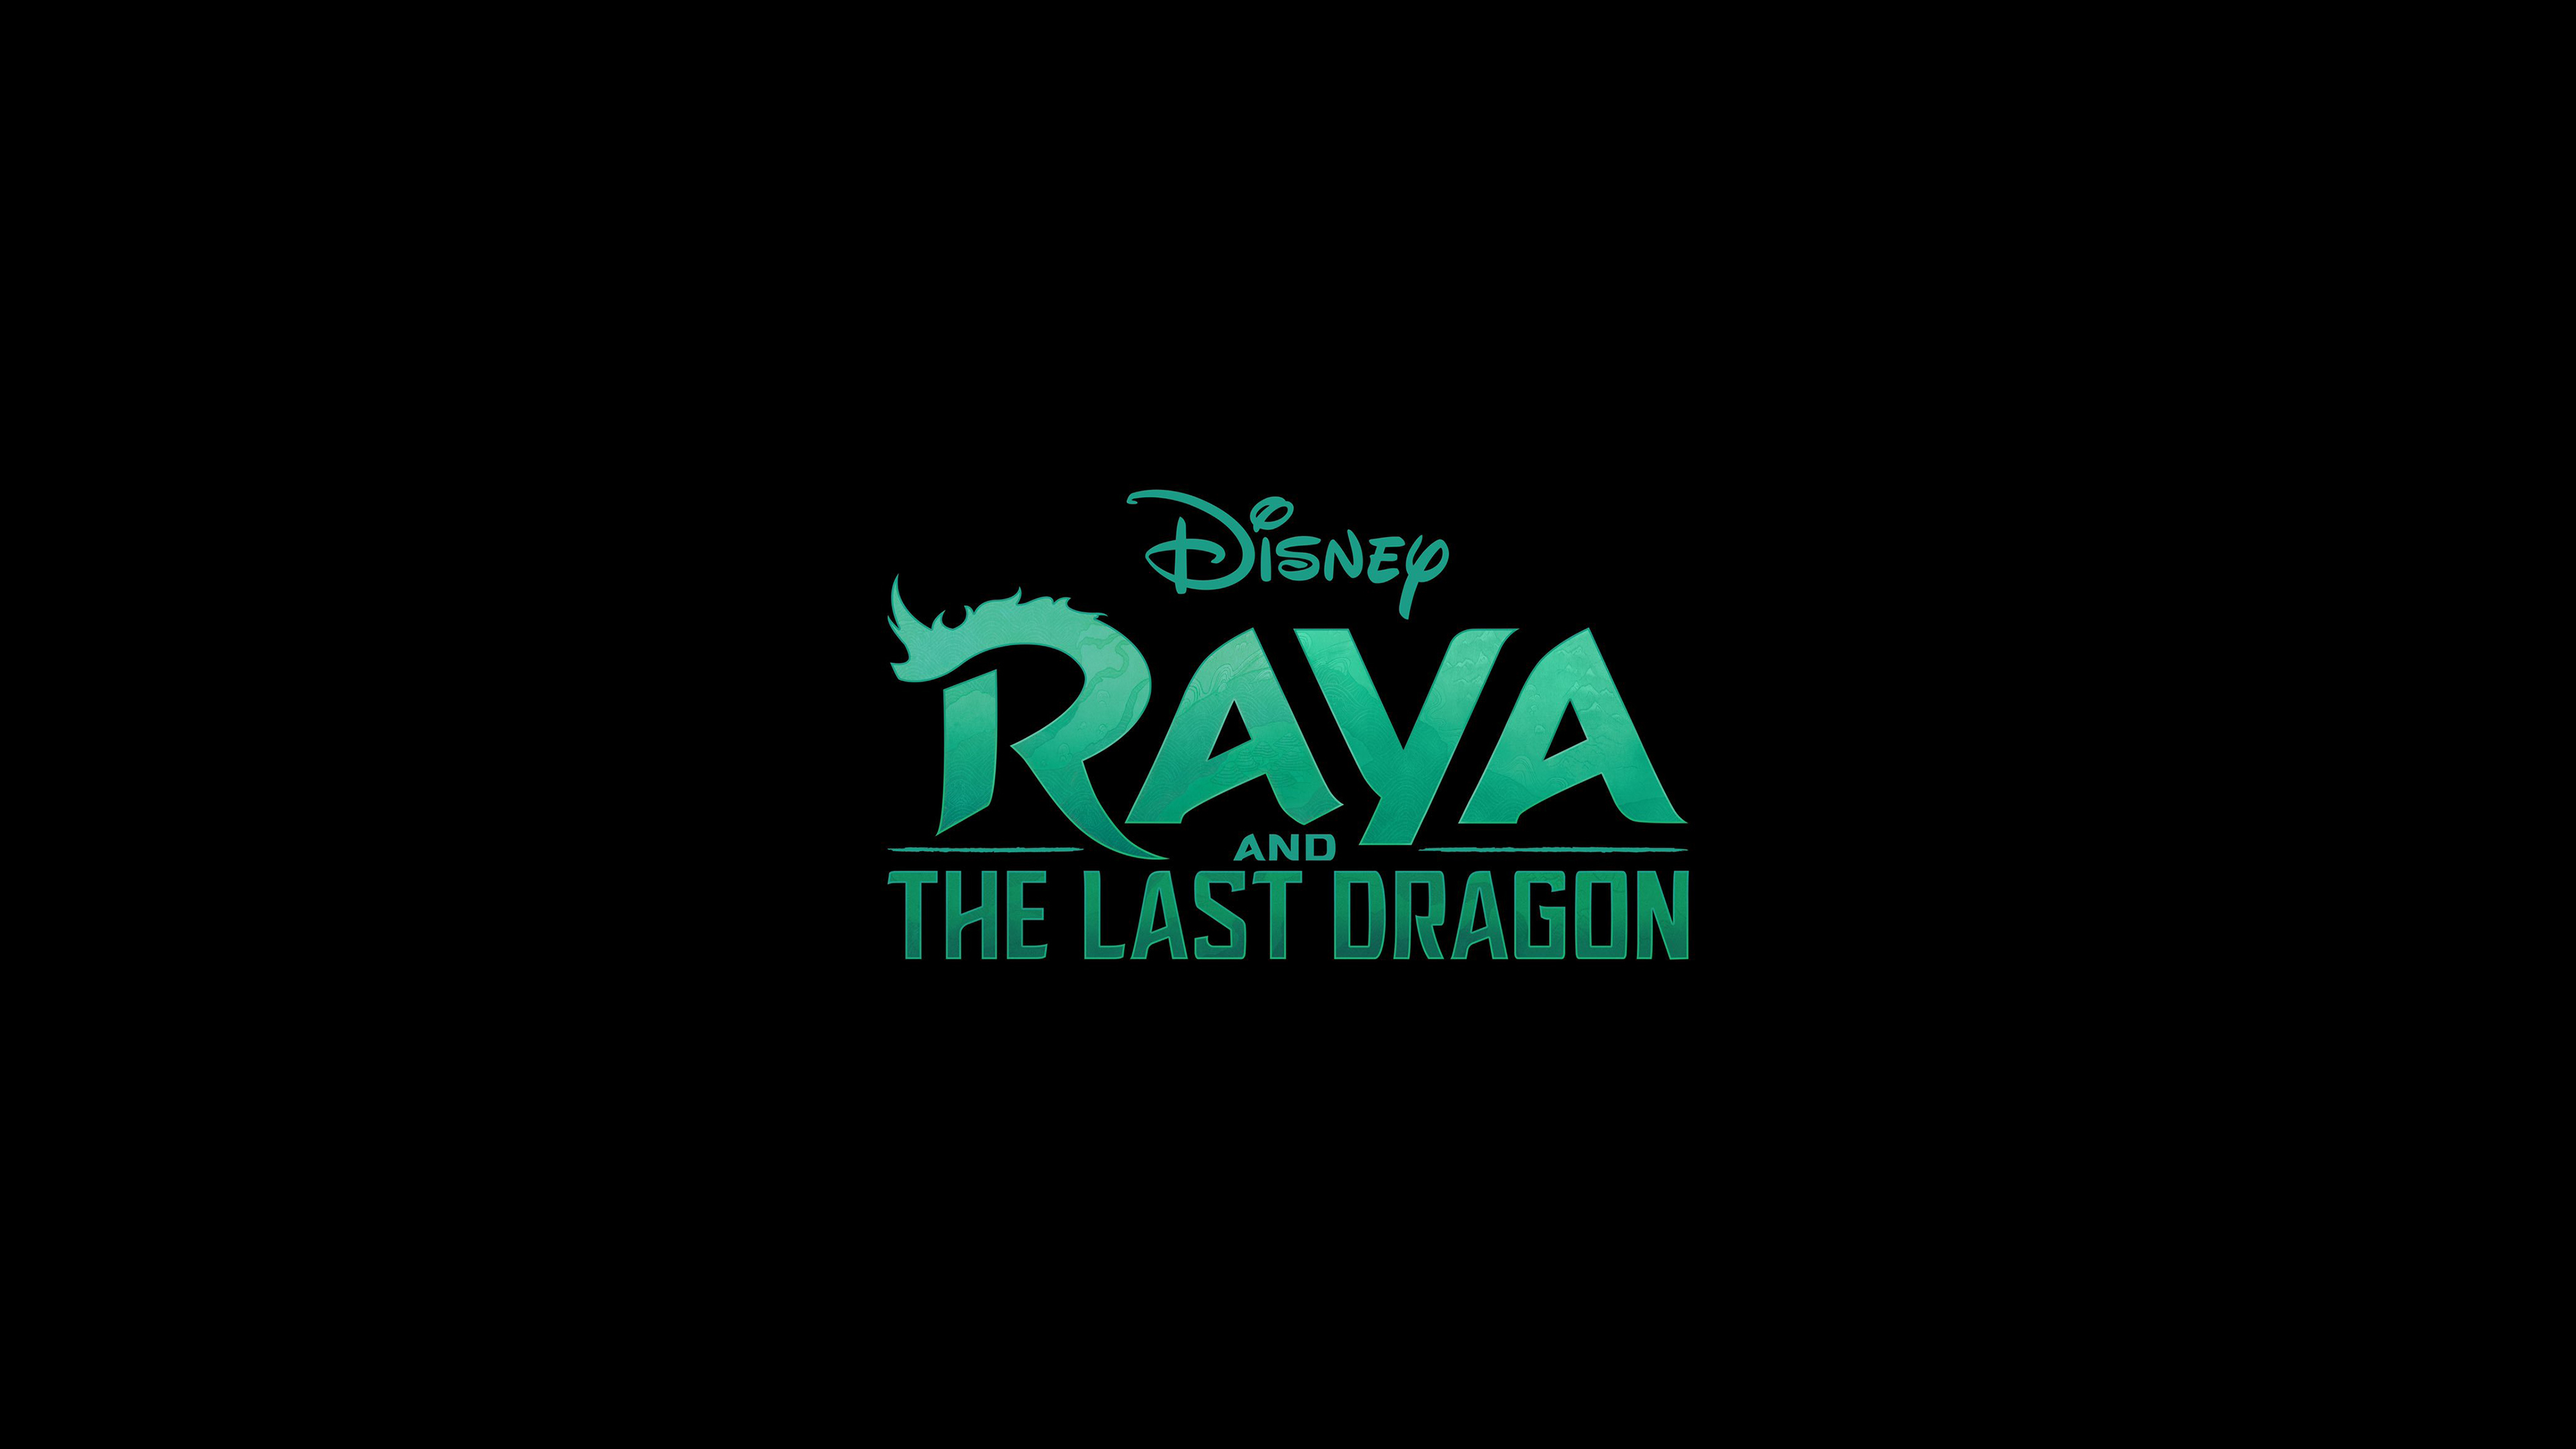 Disney Raya and The Last Dragon Poster Wallpaper, HD Movies 4K